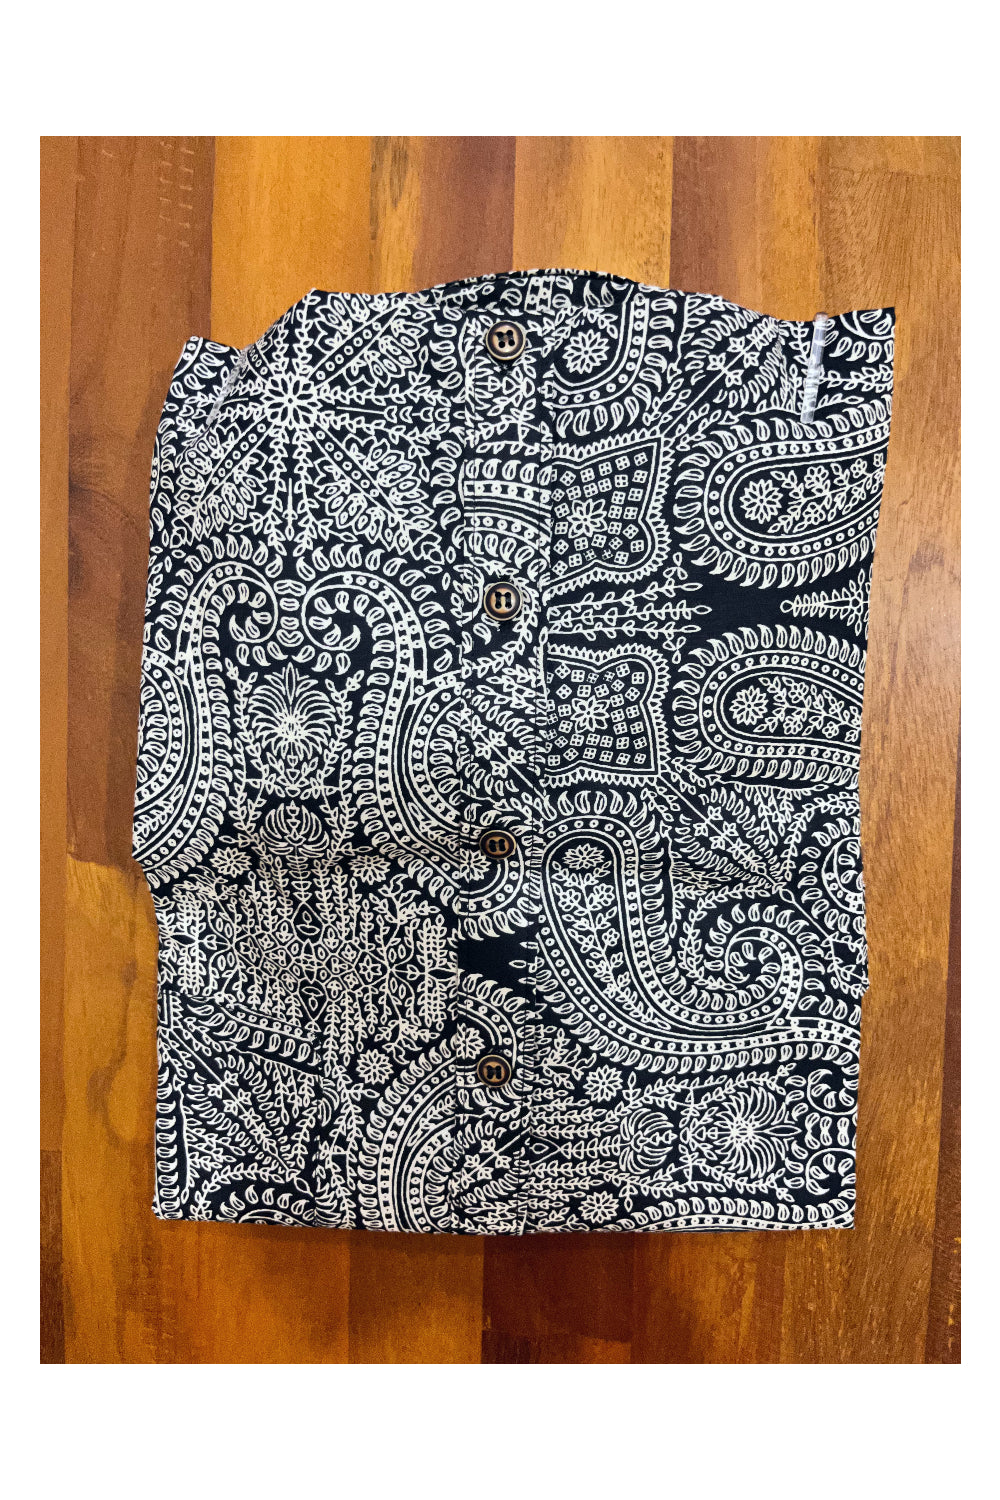 Southloom Jaipur Cotton Black White Hand Block Printed Shirt (Half Sleeves)